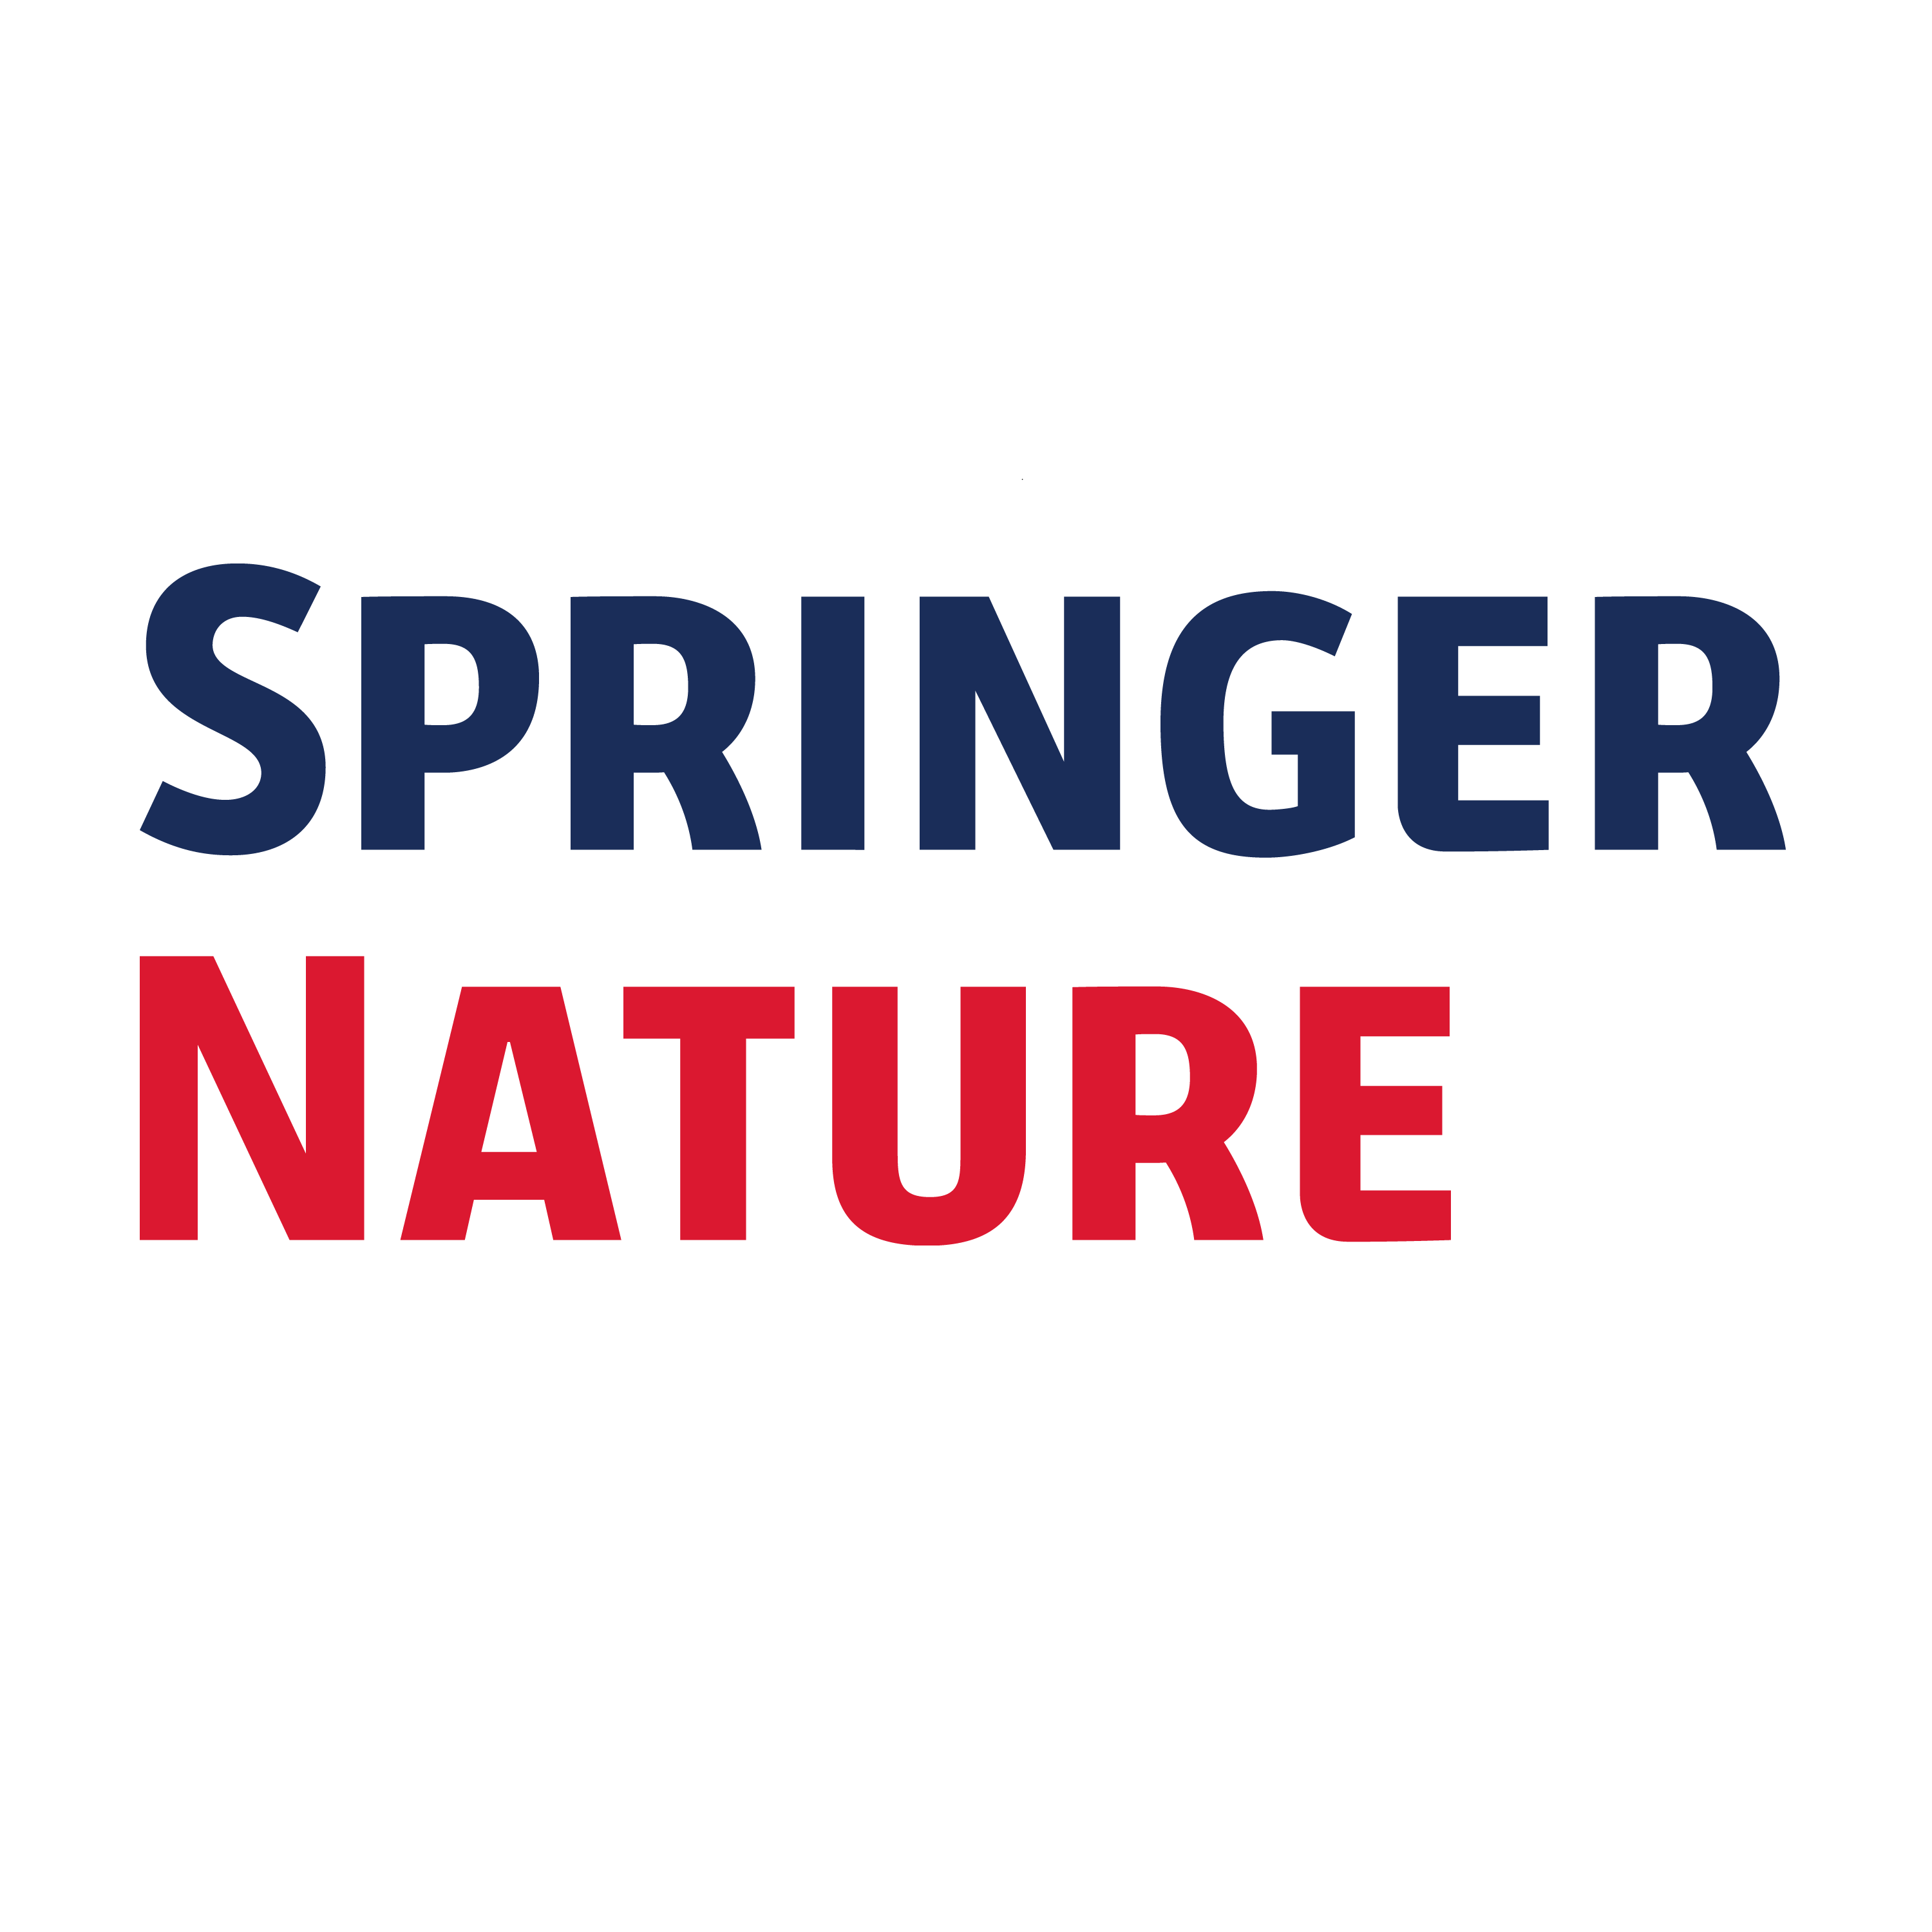 [Translate to English:] Springer Nature Logo